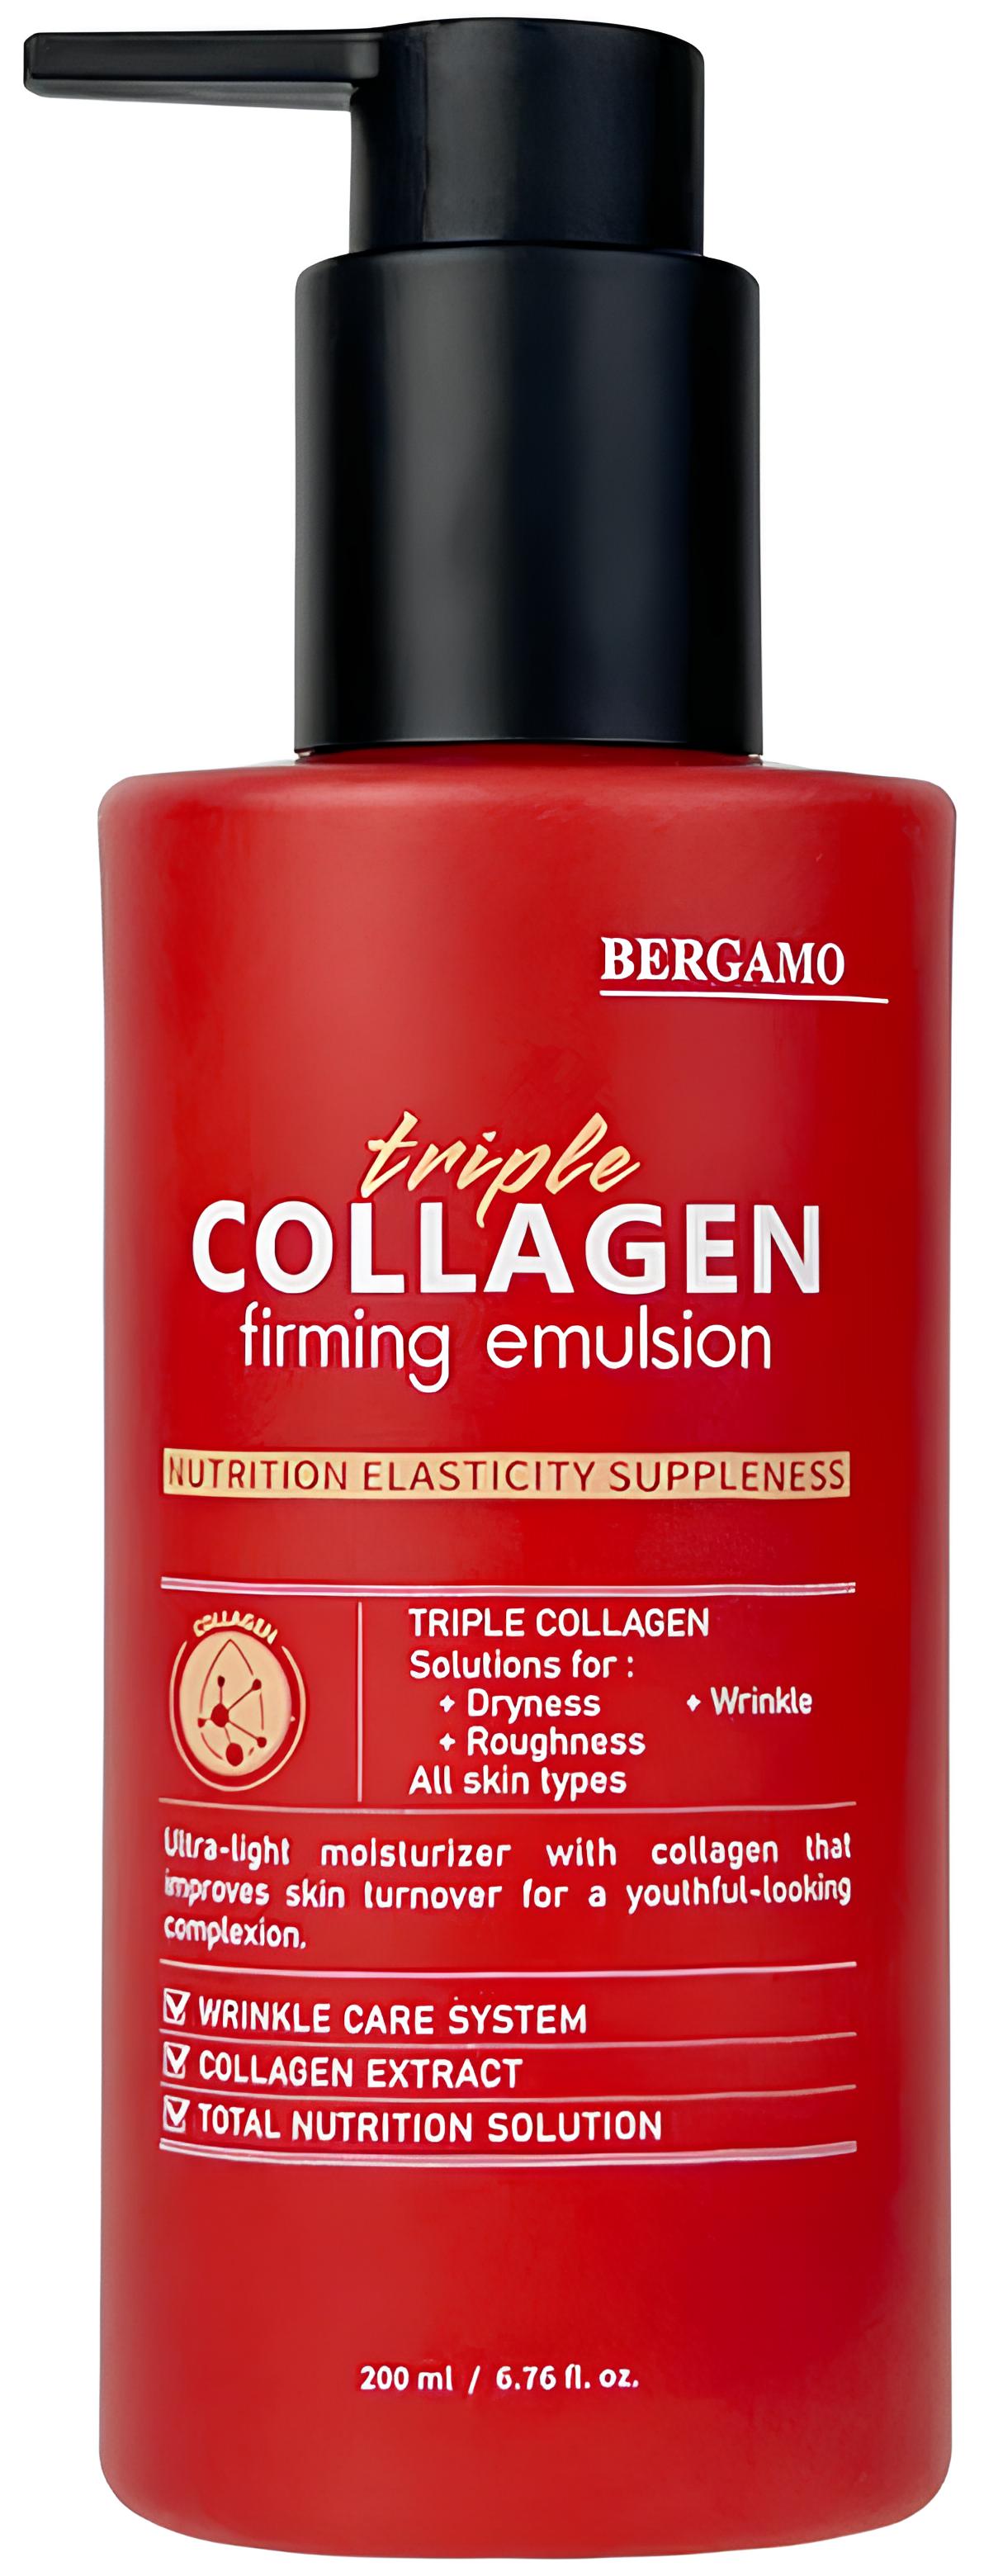 Укрепляющая эмульсия с тройным коллагеном Bergamo Triple Collagen Firming Emulsion 200 мл лэтуаль dear molly эссенция с коллагеном укрепляющая essence collagen firming